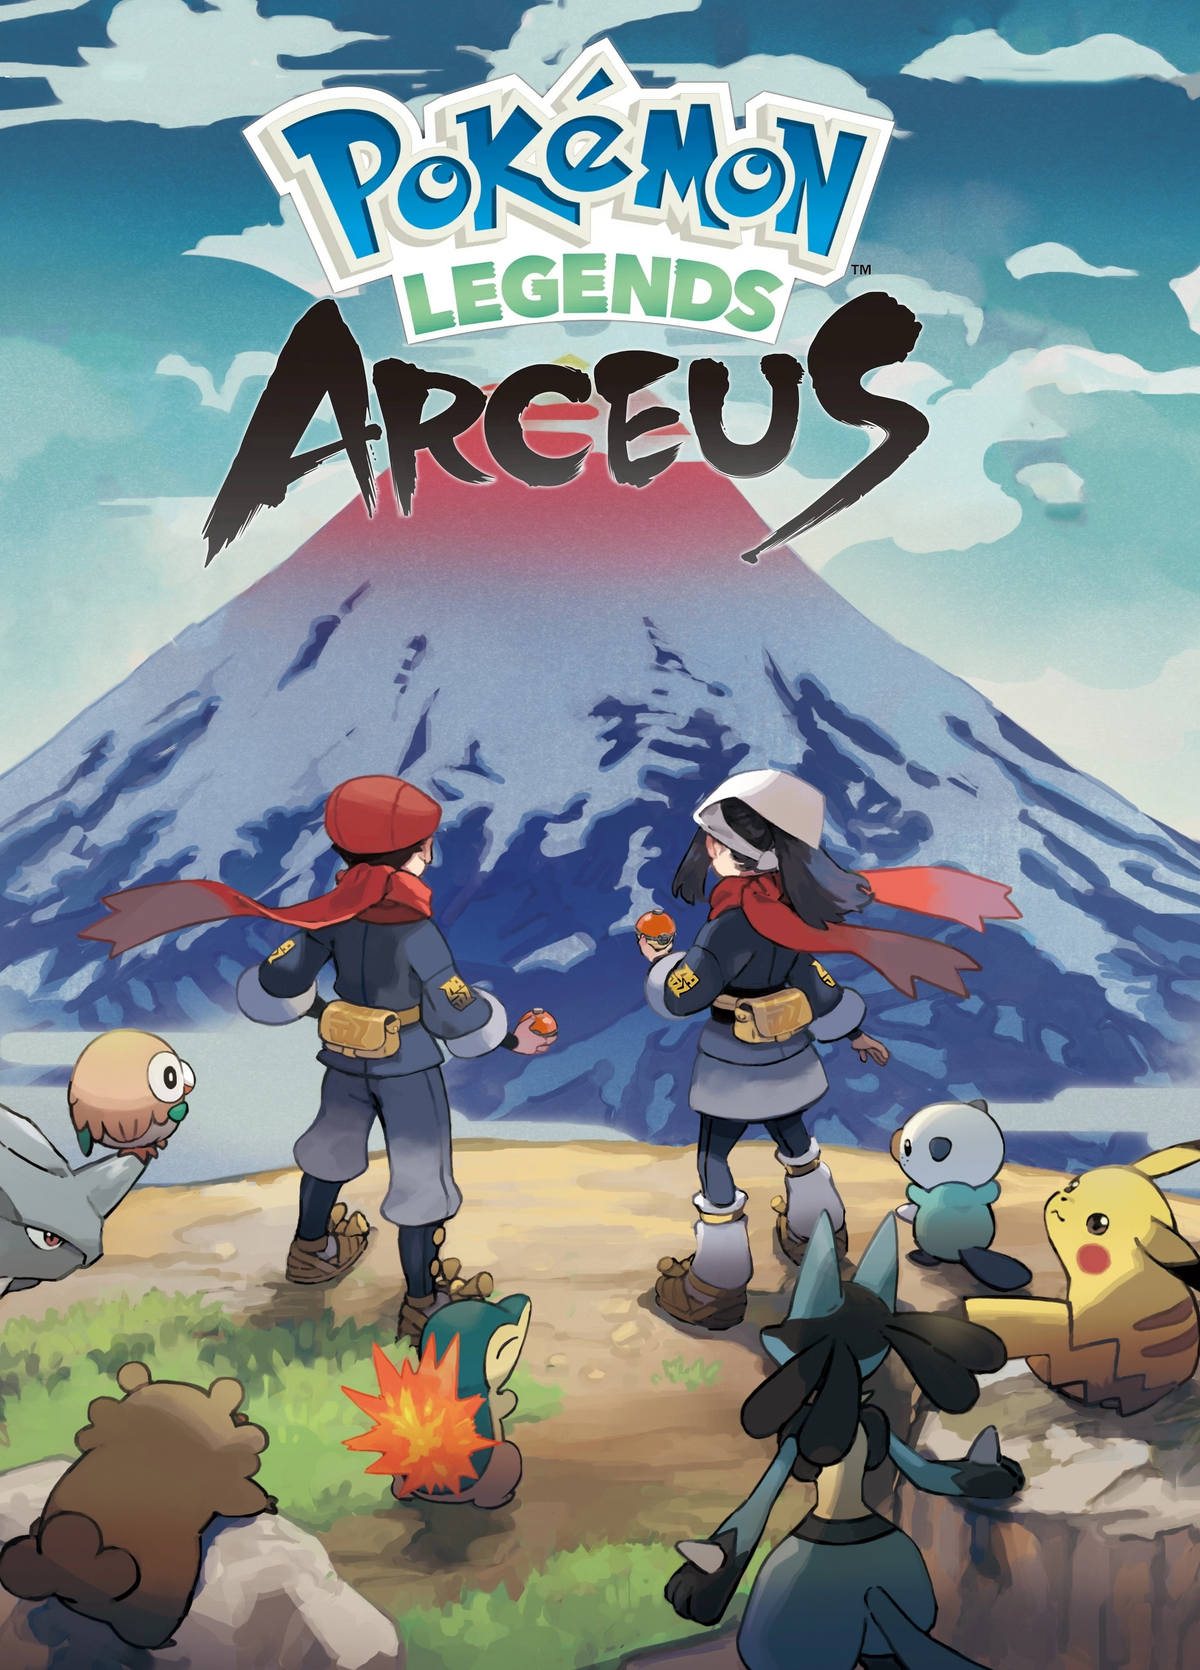 Pokemon Legends Arceus, Vol. 1 - Album by VGM Squad - Apple Music